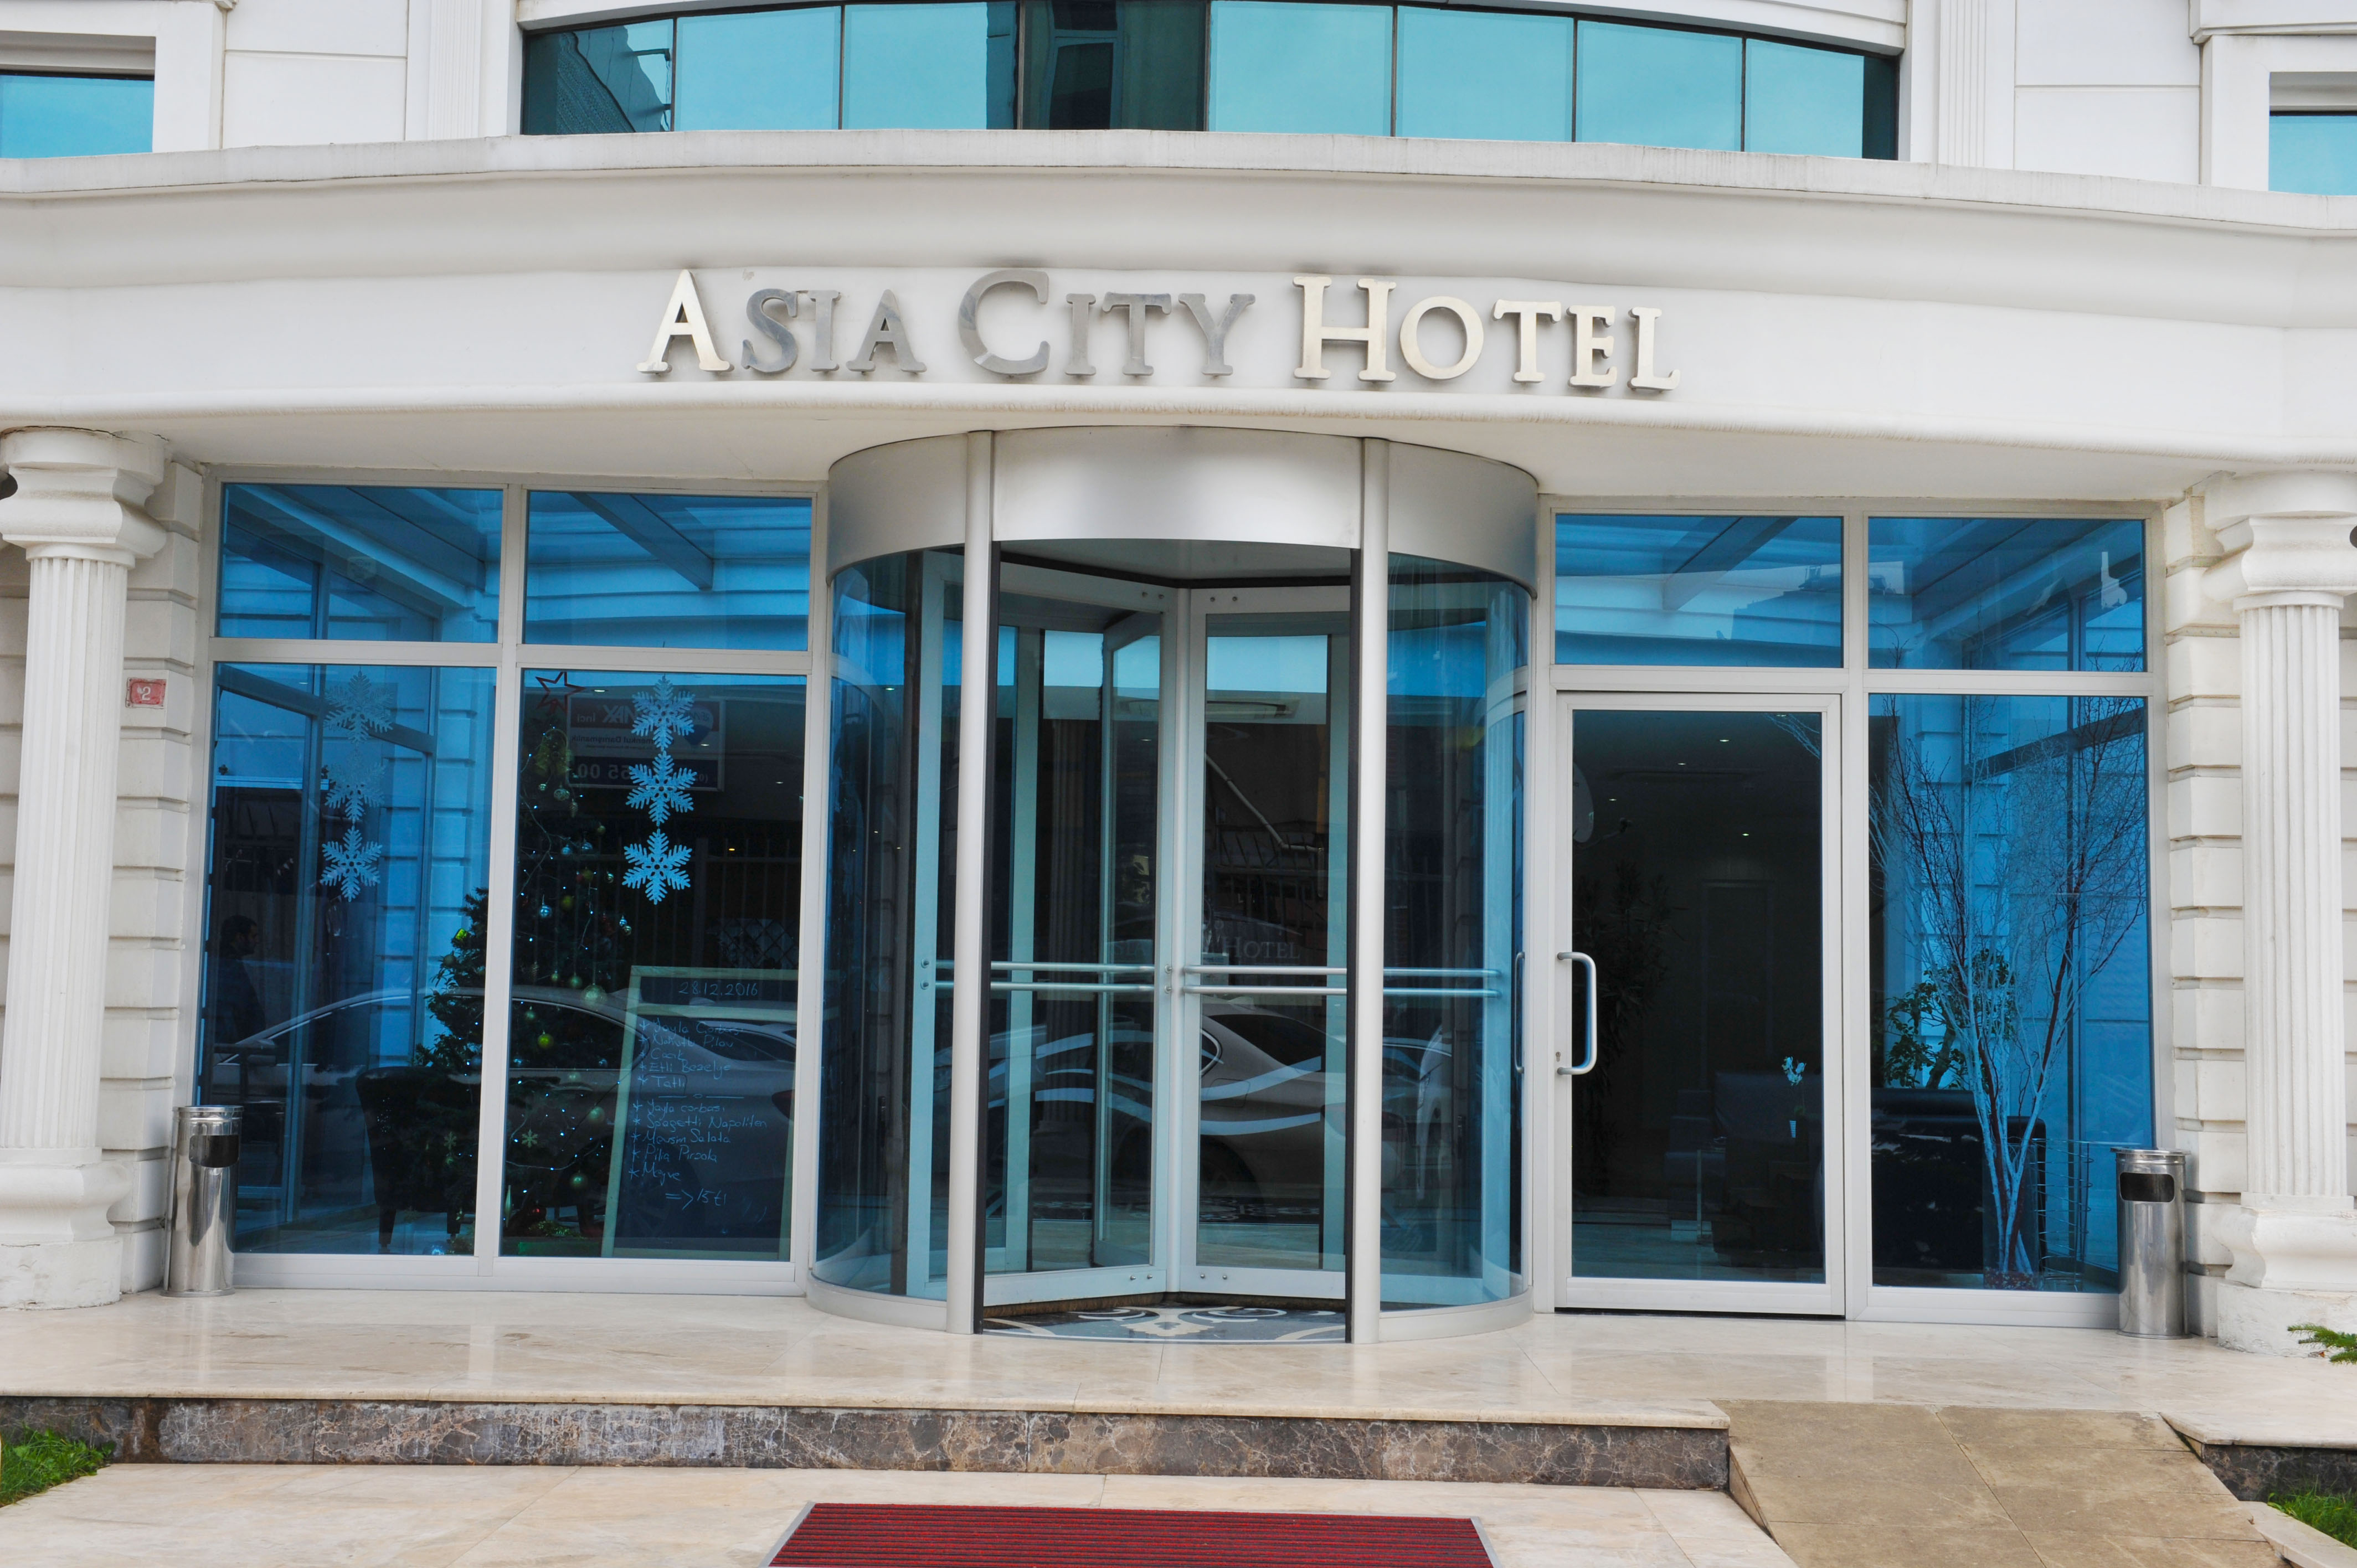 Hotel Asia City